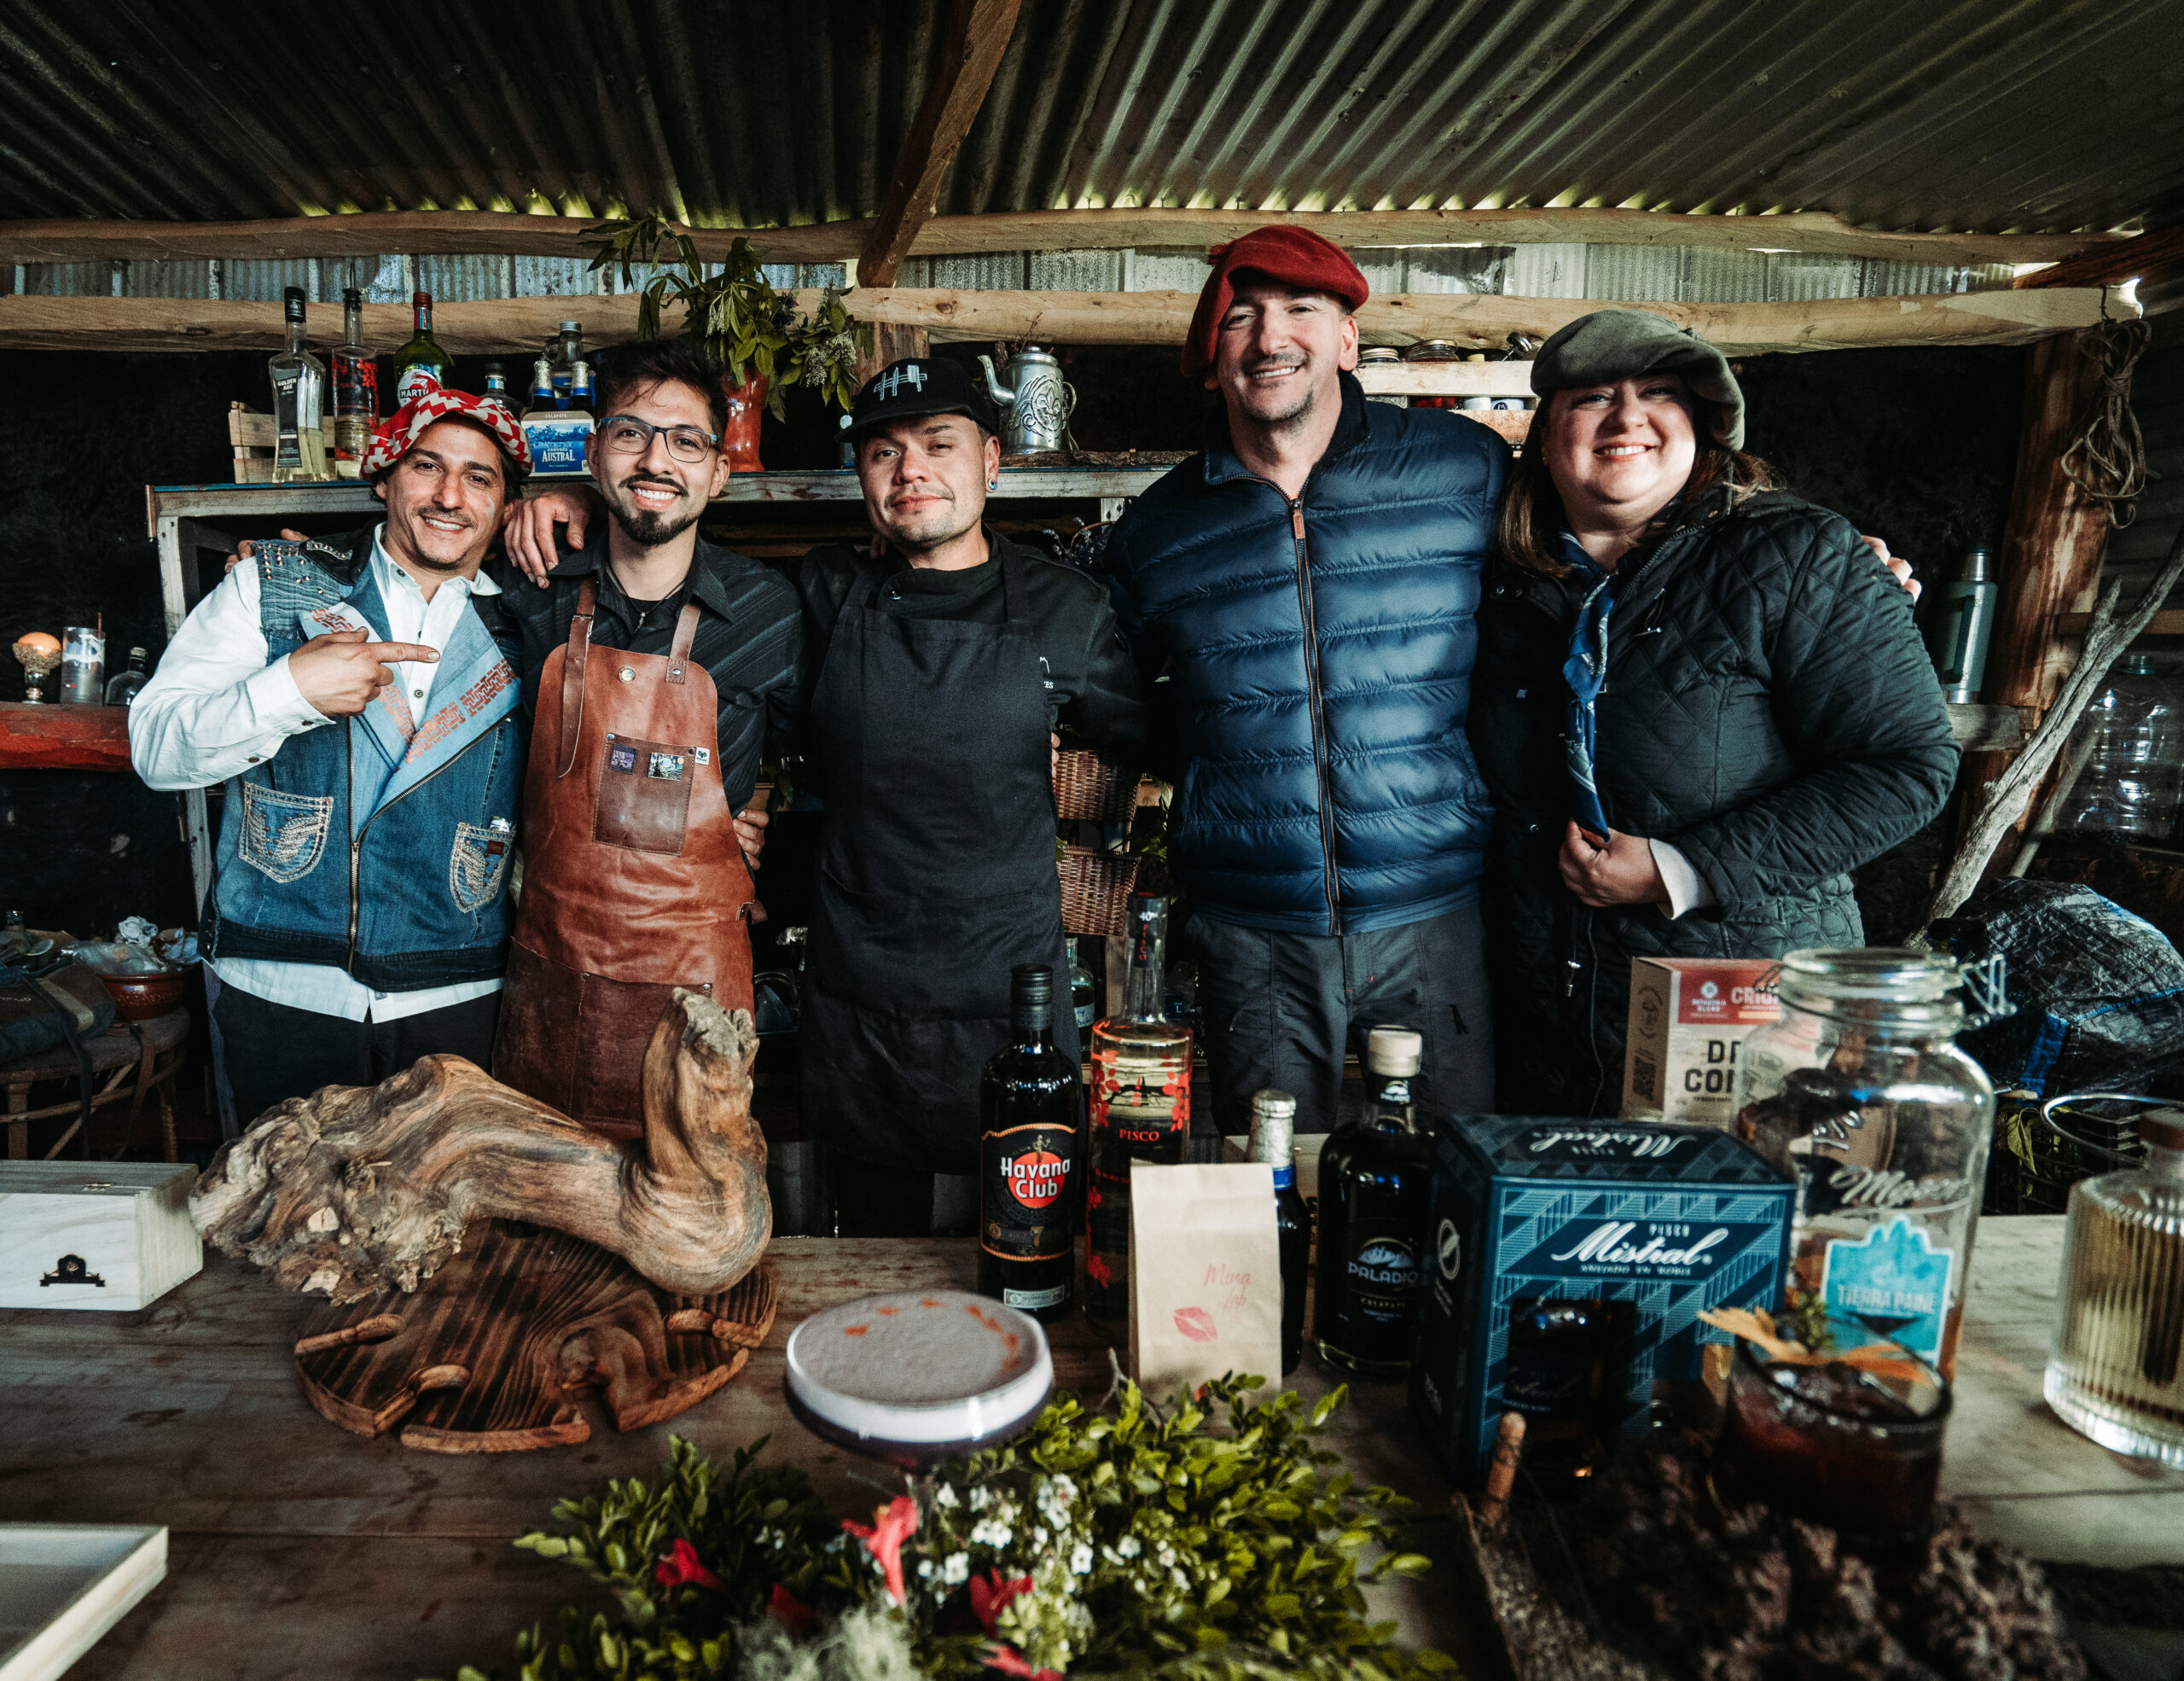 Las Torres Patagonia team takes first prize at Calafate Fest